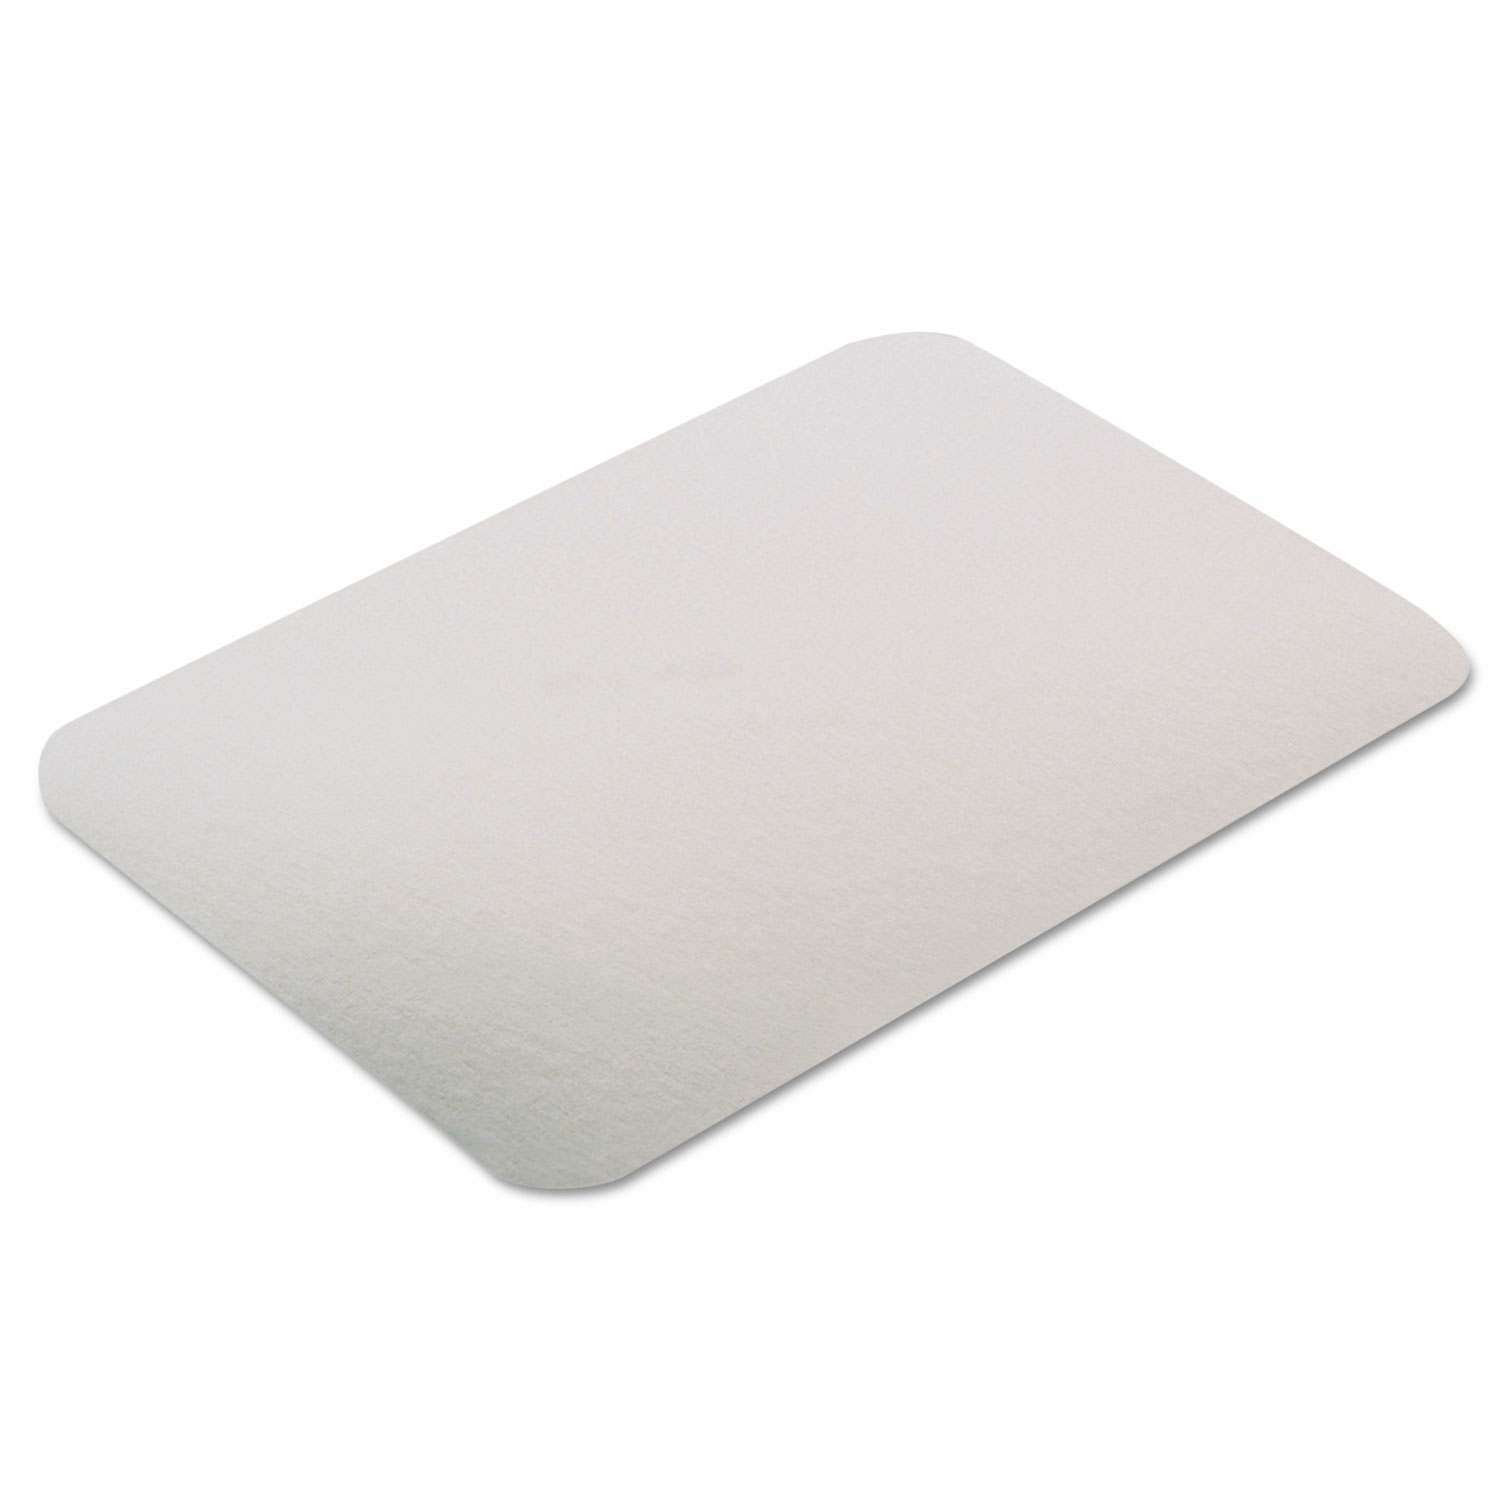  Pactiv YL788 Rectangular Flat Bread Pan Covers, 8.4 x 5.9, White/Aluminum, 400/Carton (PCTYL788) 